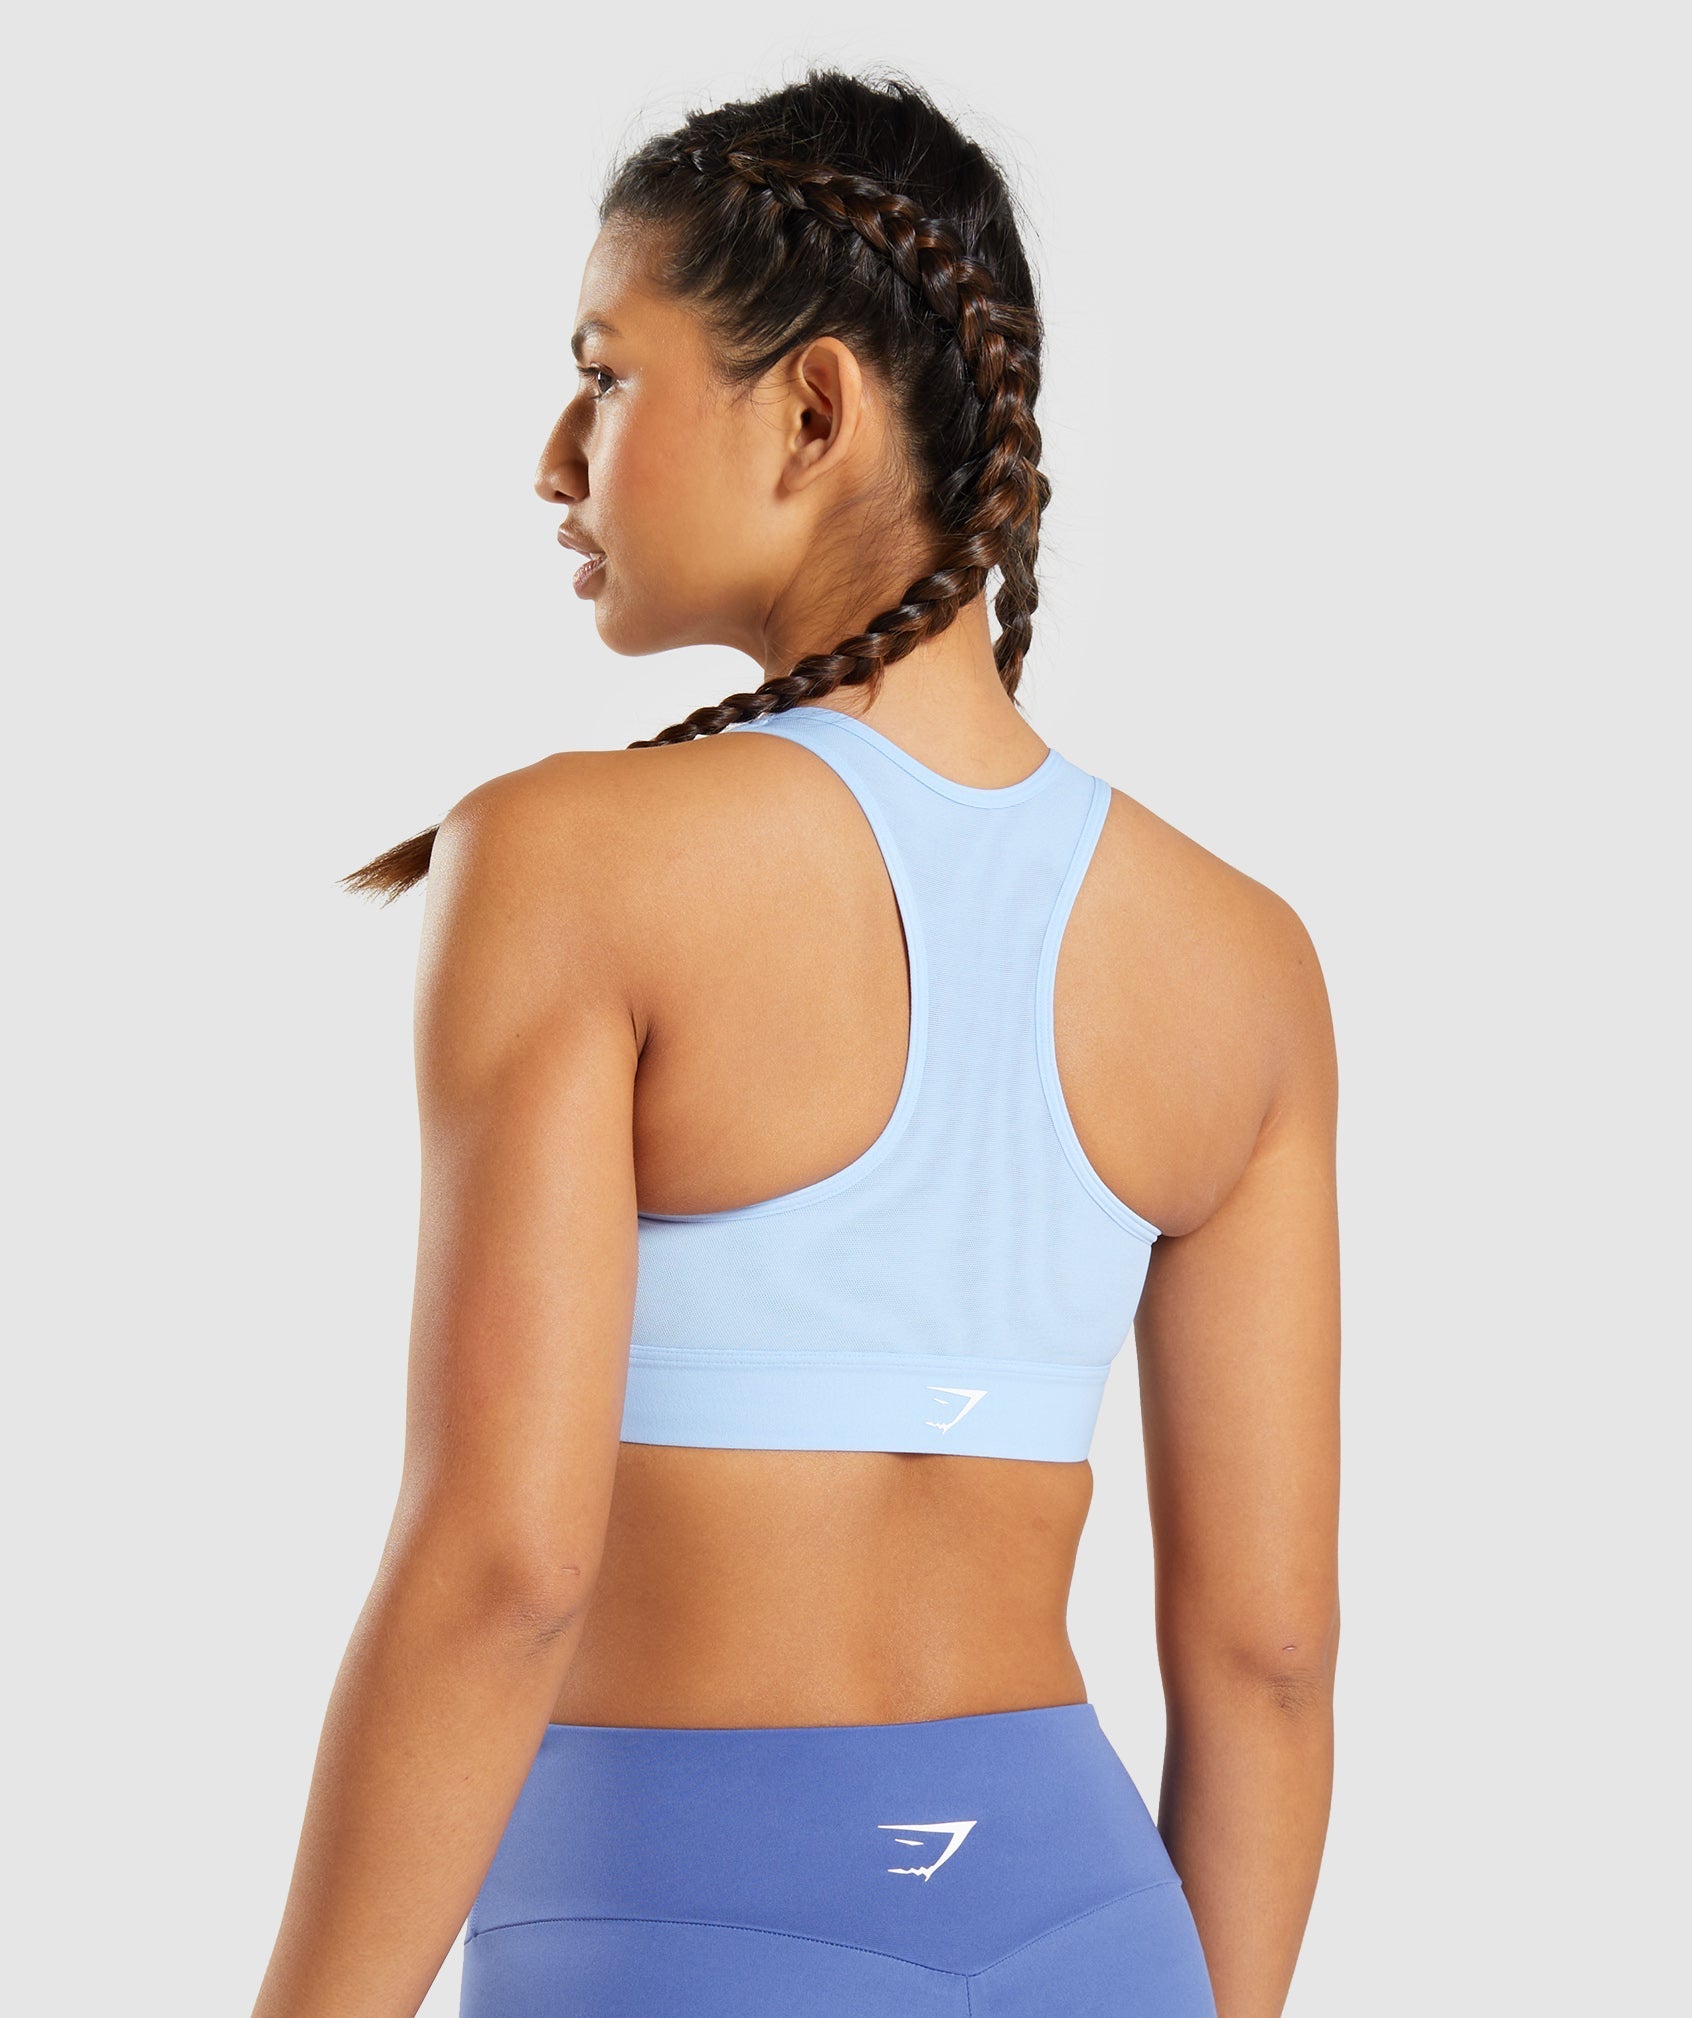 Gymshark - blue sports bra pads included Size XS - $19 - From Mooshkini